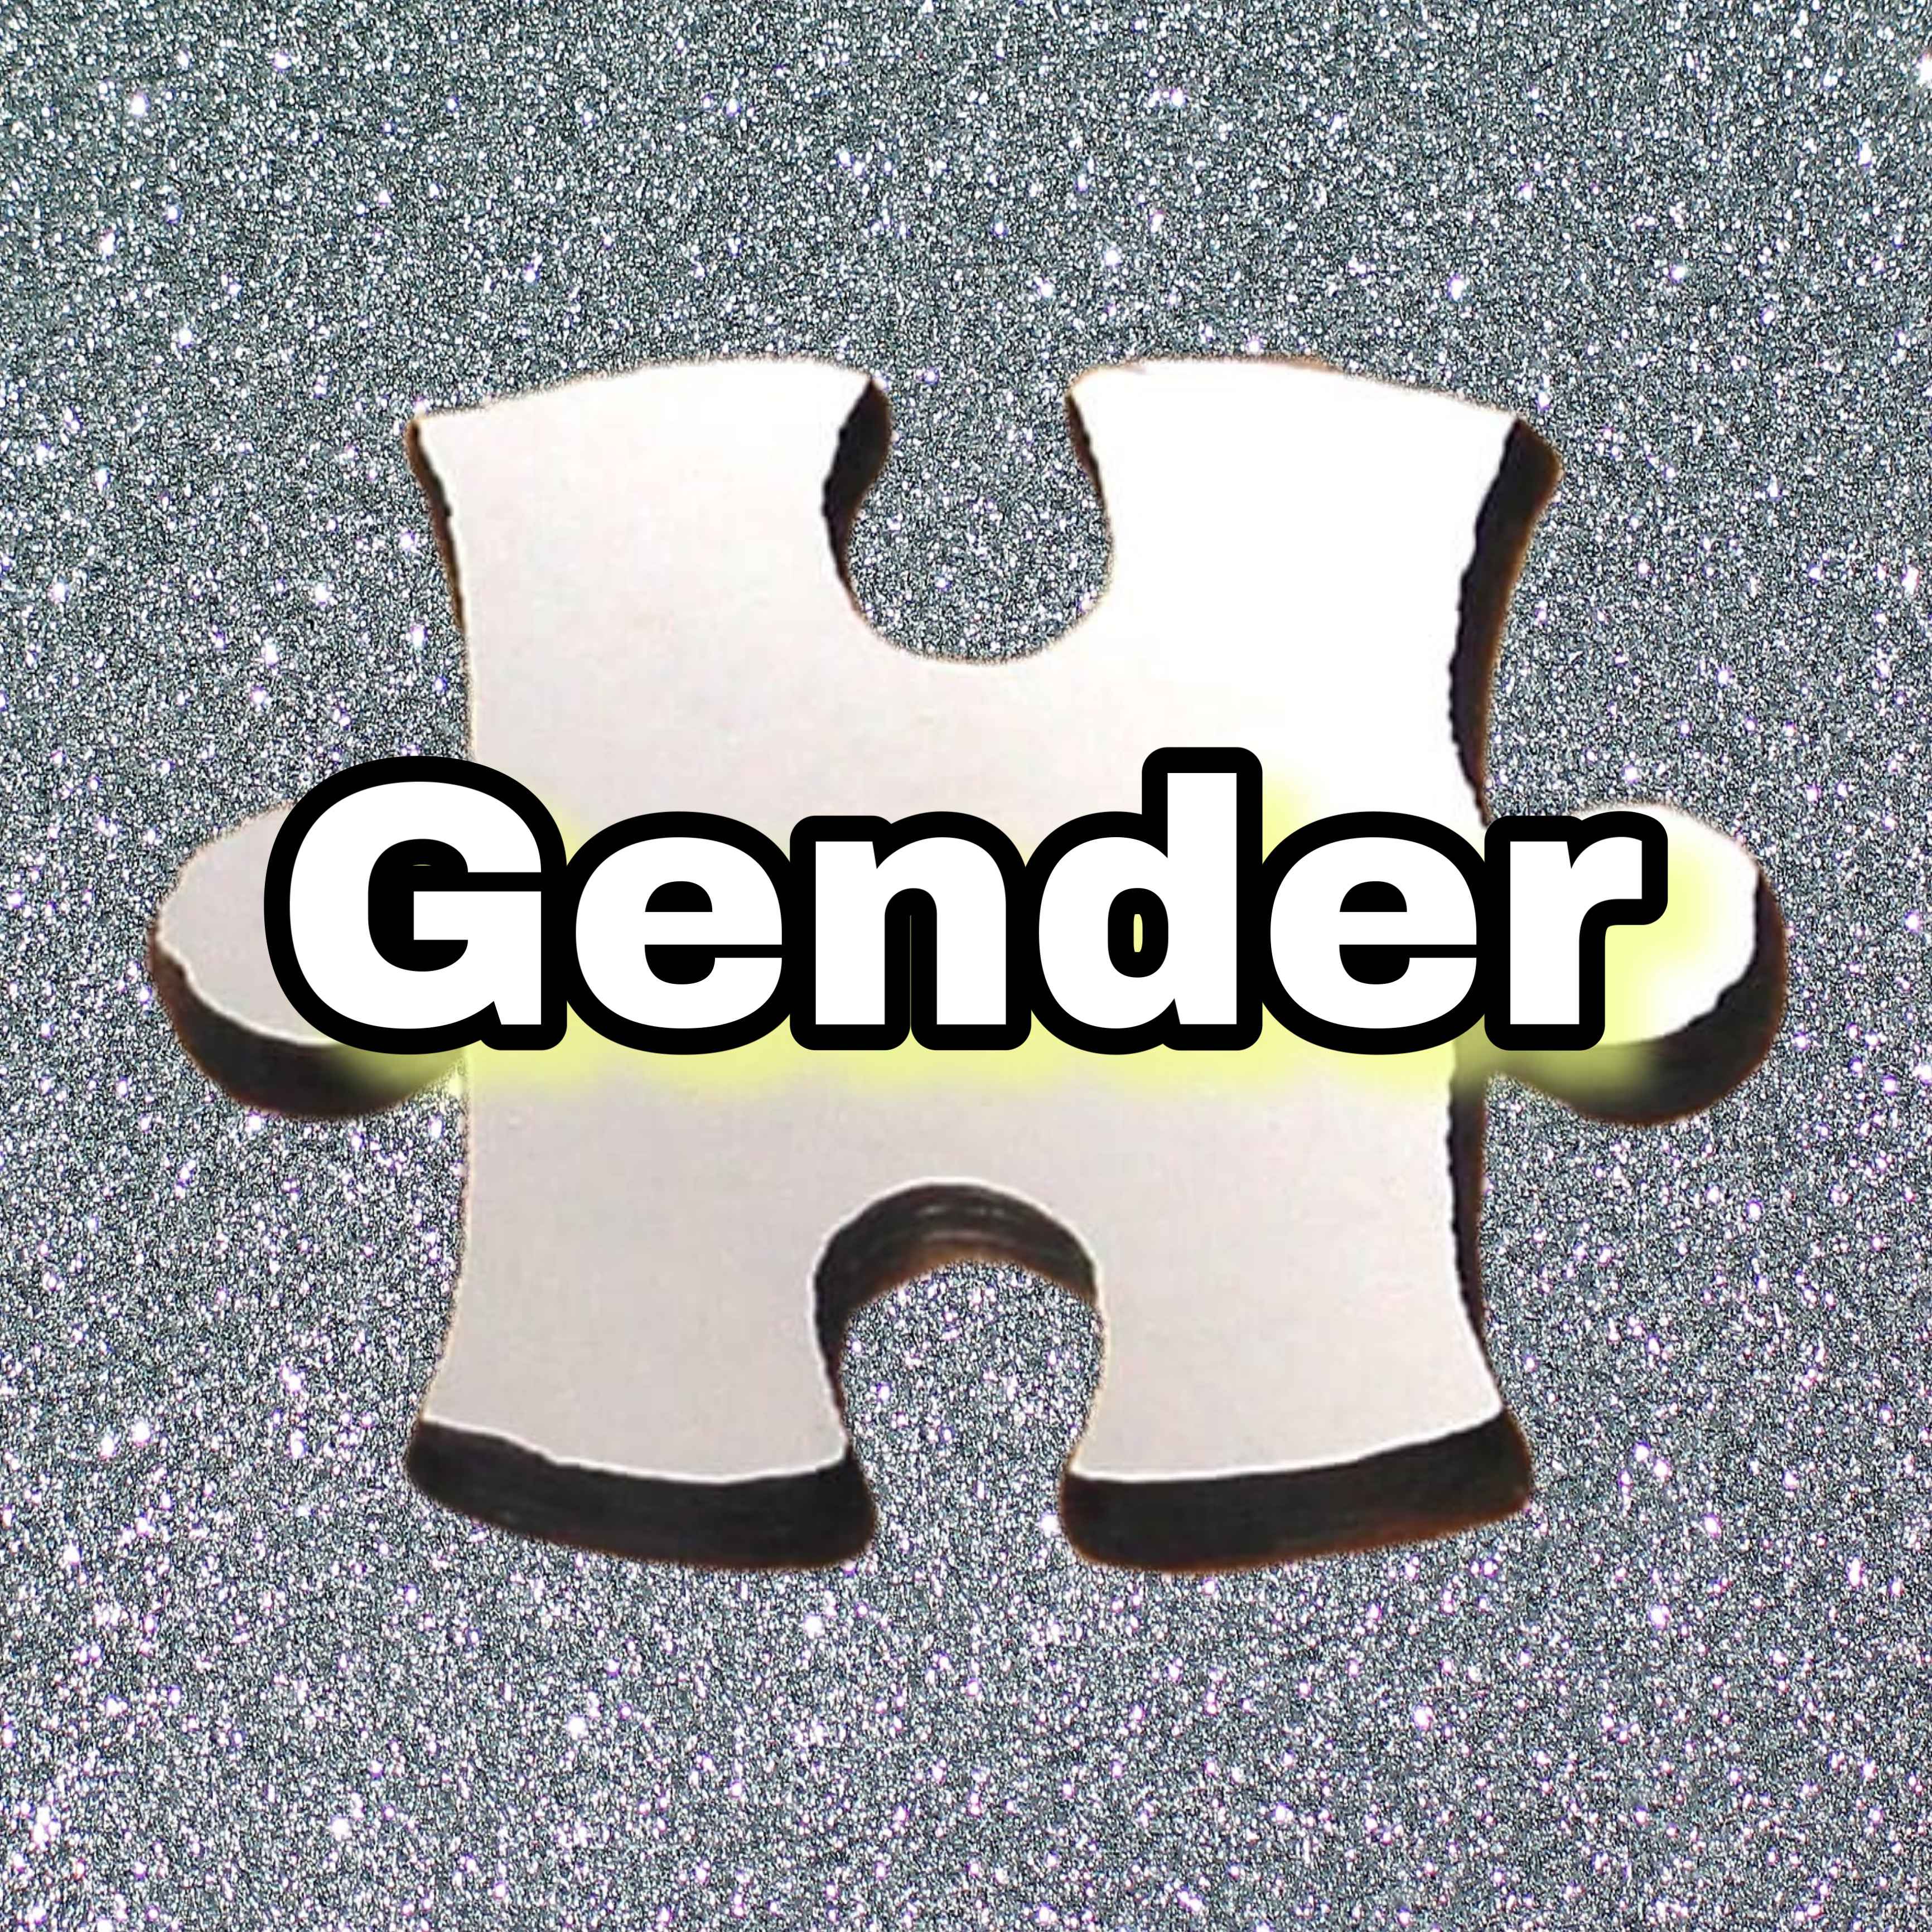 Glittery Gender Puzzle Piece